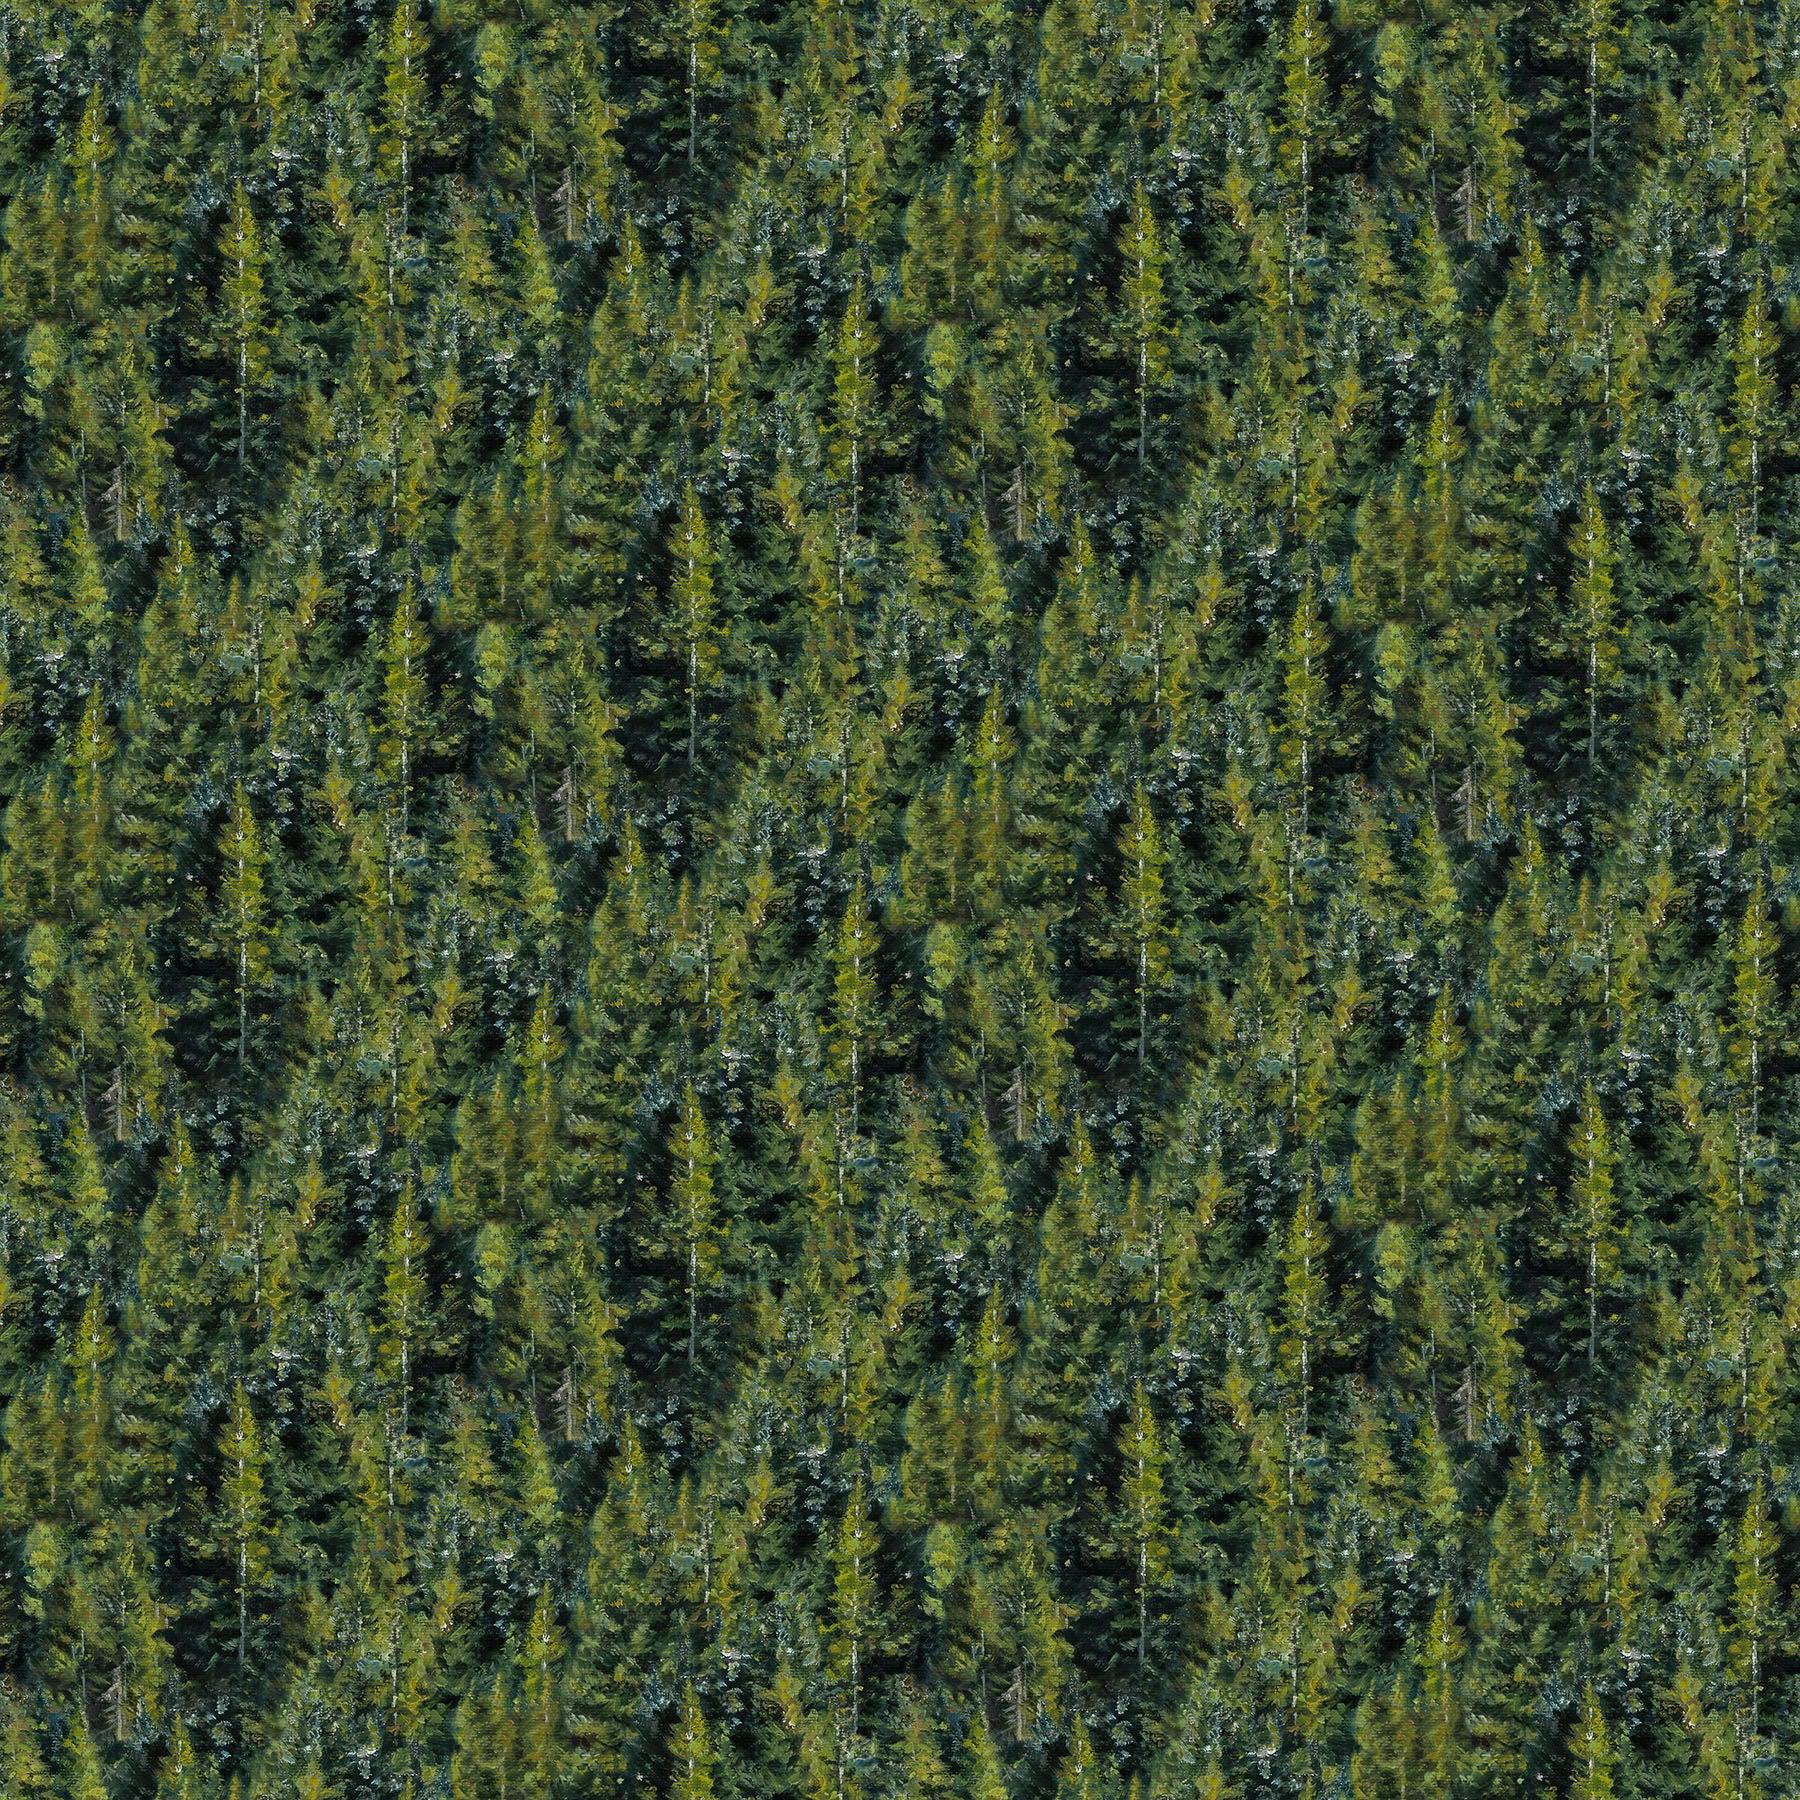 Hidden Valley Naturescapes Dark Green Trees Digital Print Fabric